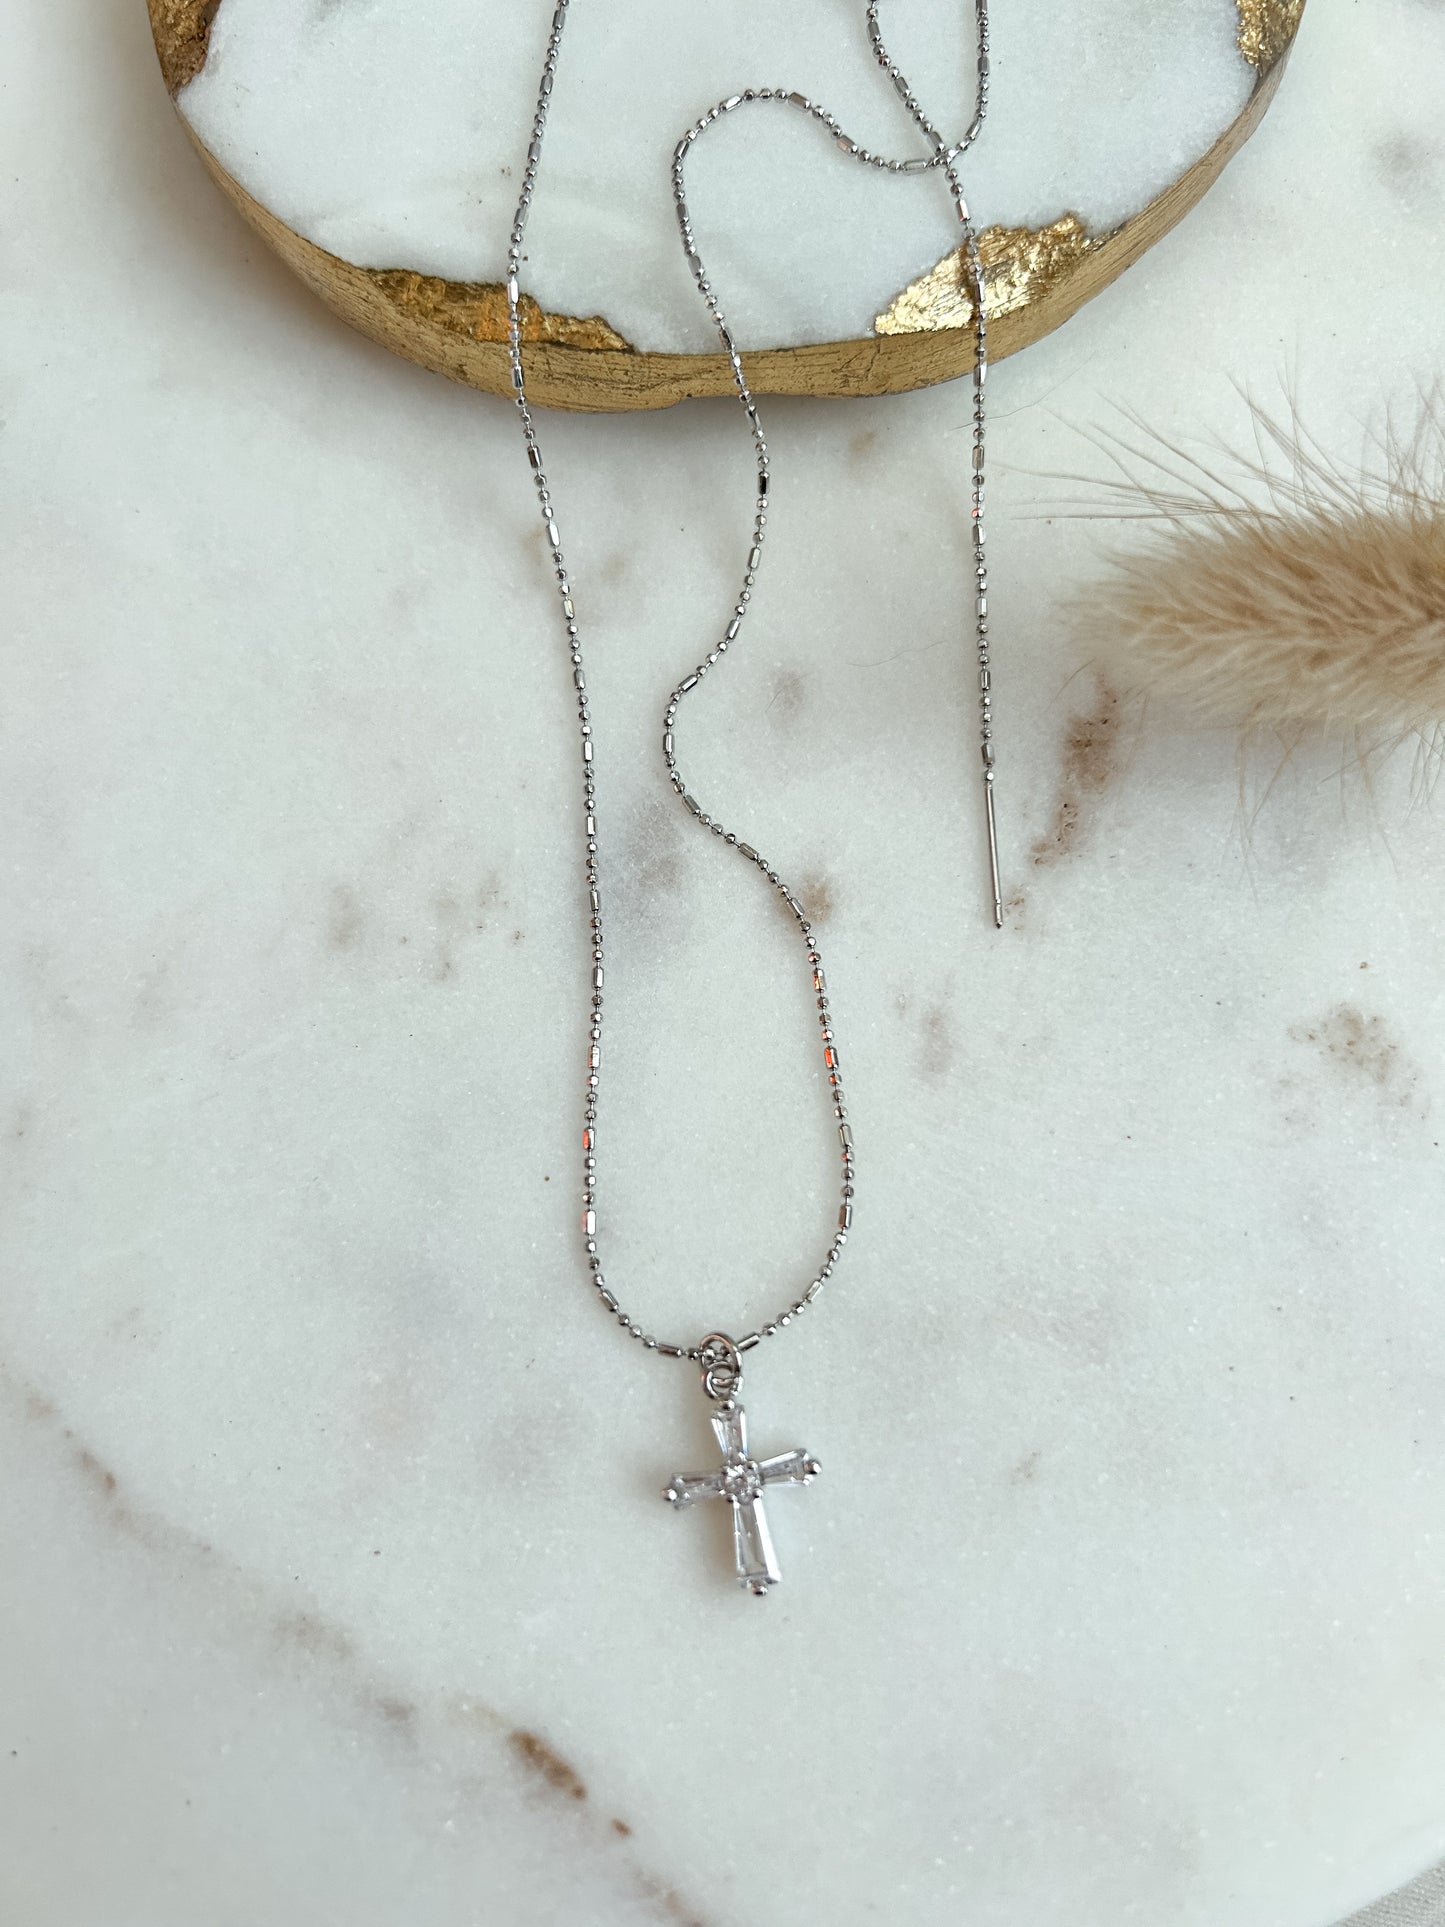 I love you Jesus (Silver dainty necklace)